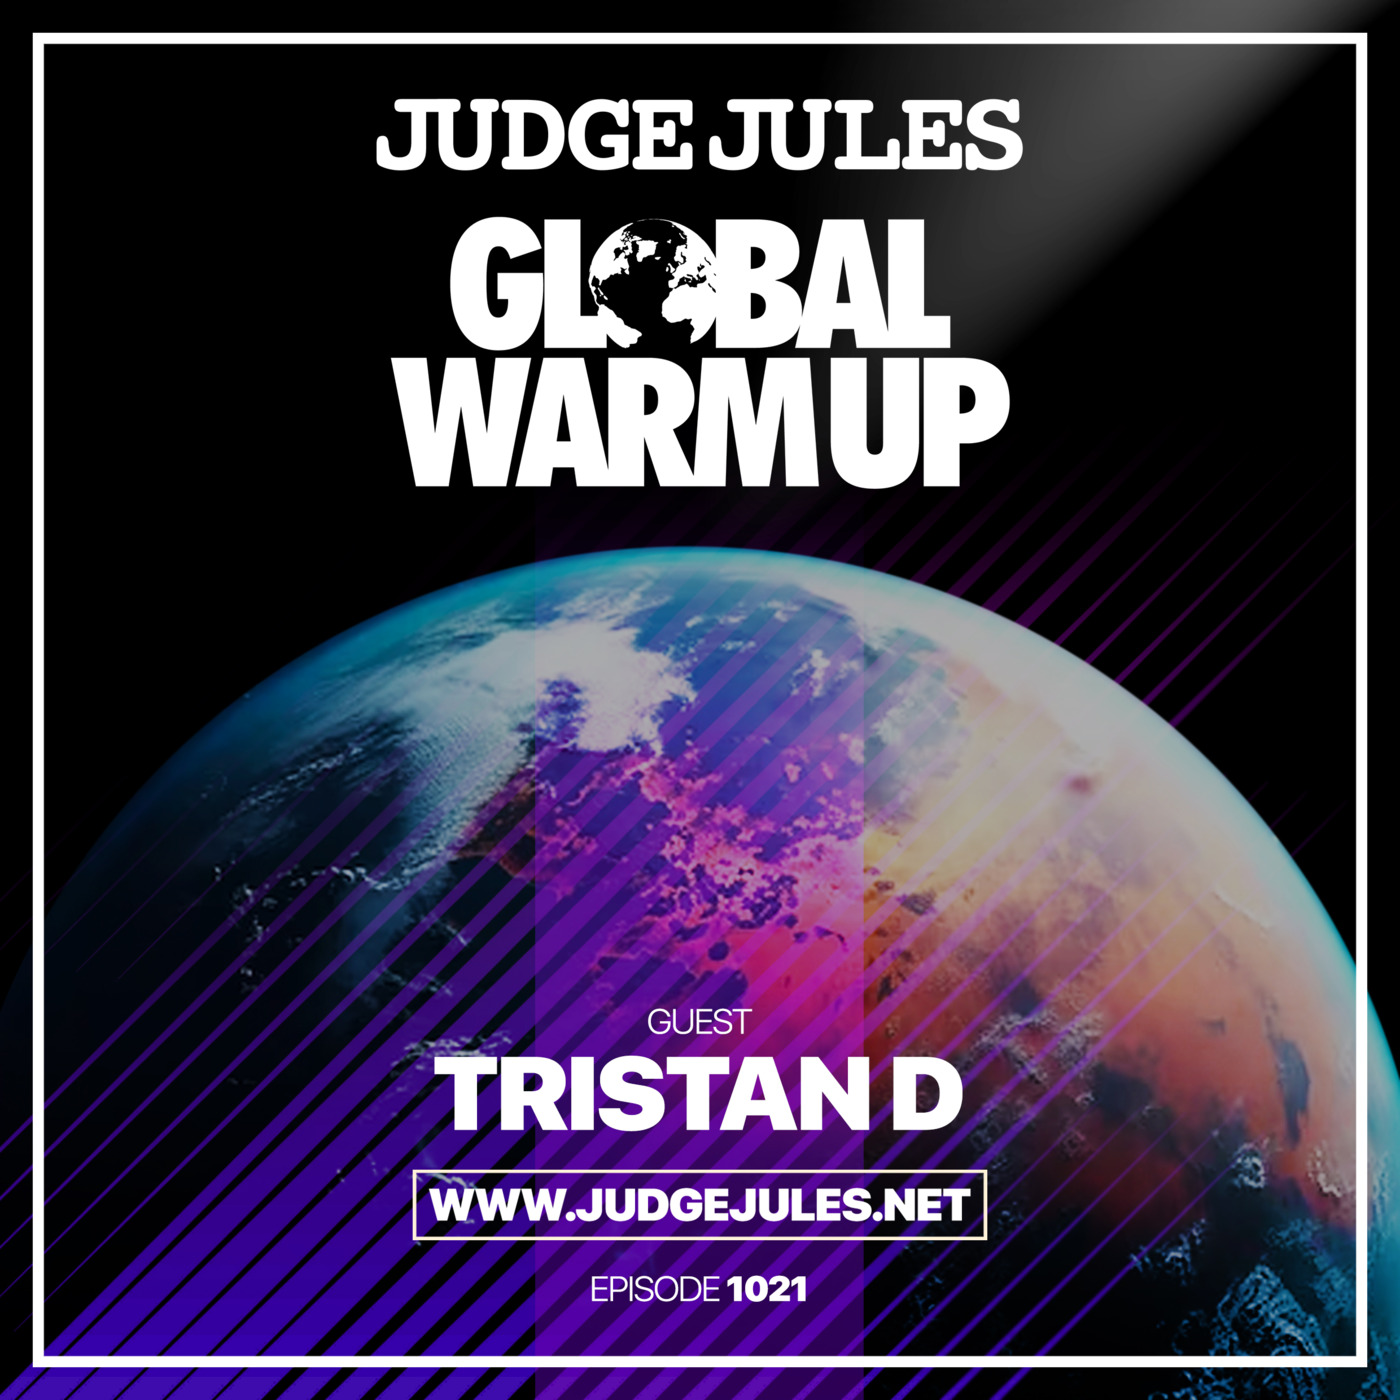 Episode 1021: JUDGE JULES PRESENTS THE GLOBAL WARM UP EPISODE 1021